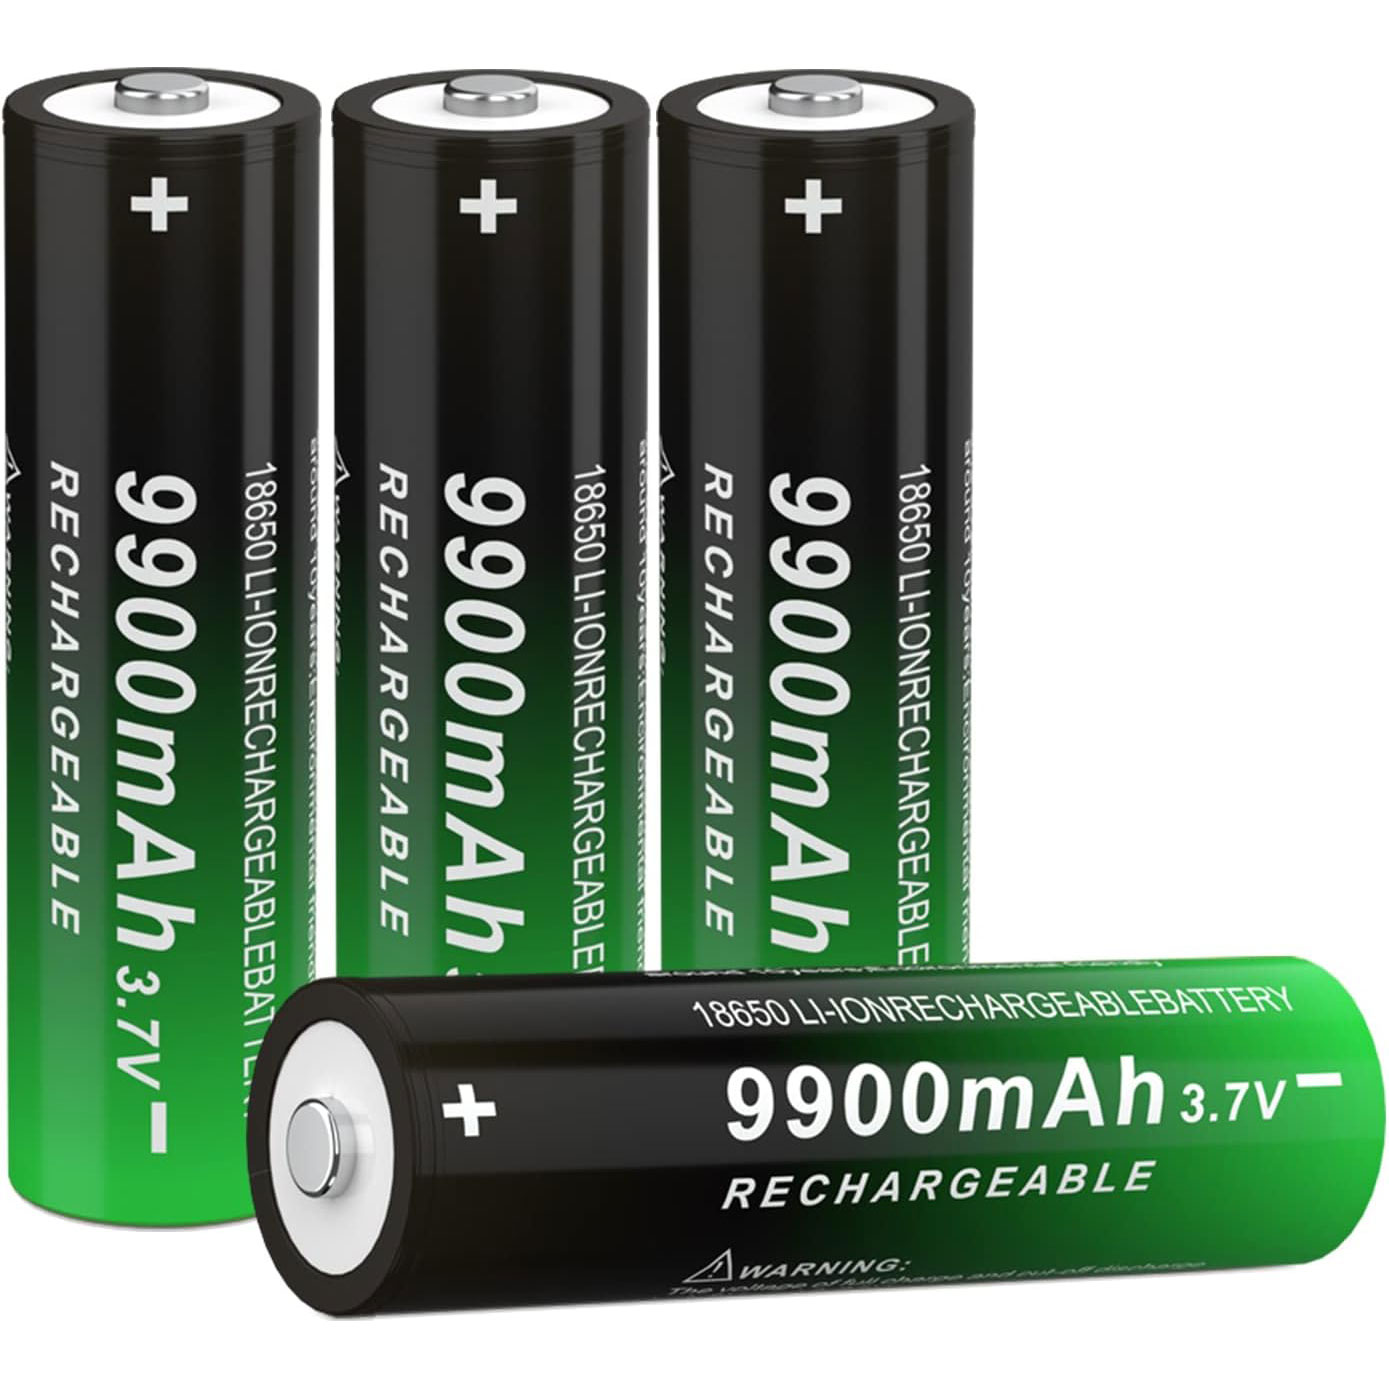 3.7 Volt Rechargeable Battery 9900mAh for Headlamp, Doorbells, Flashlight, Small Fan, etc (4 PCS)